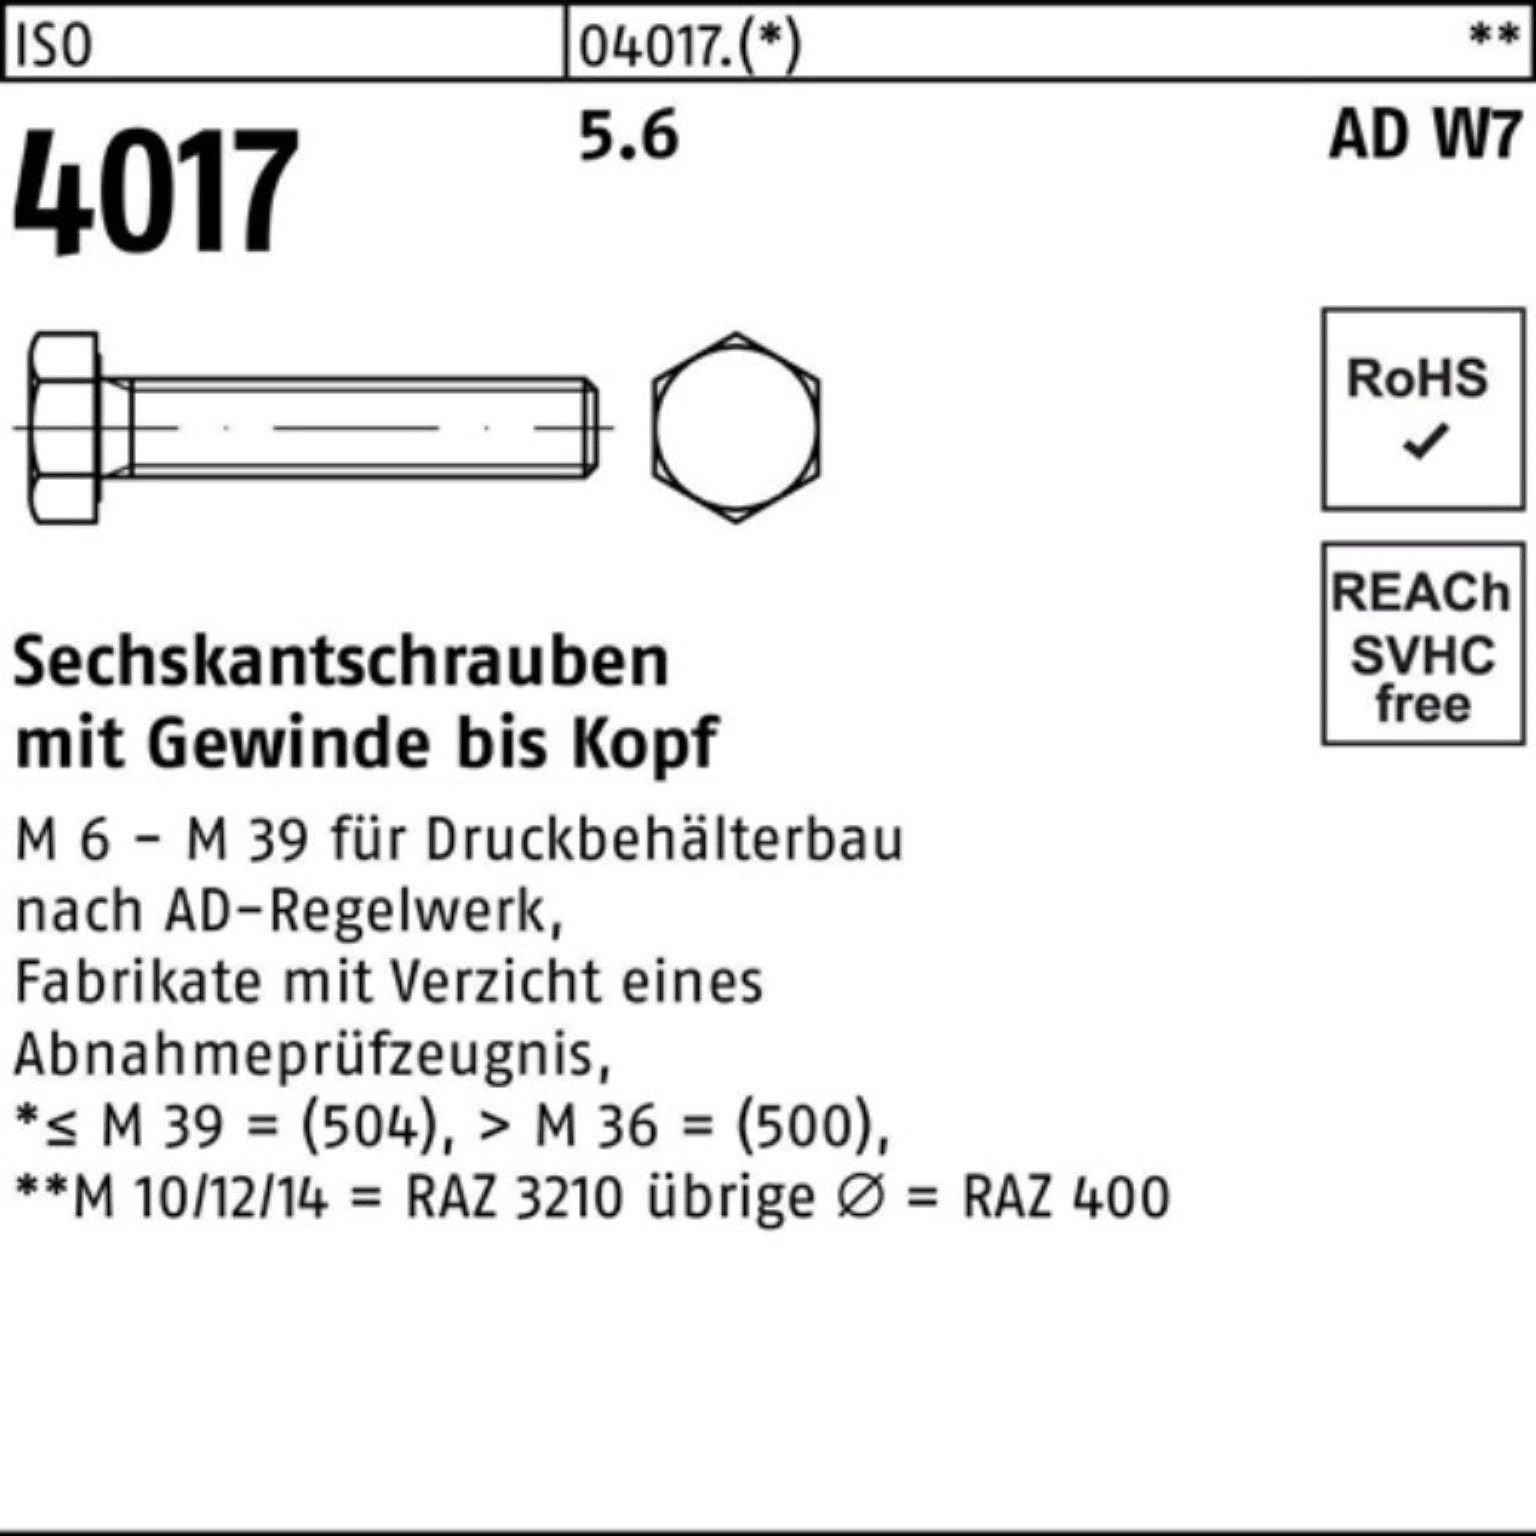 Bufab Sechskantschraube 200er Pack Sechskantschraube W7 ISO VG 25 AD 4017 Stück 5.6 M10x 200